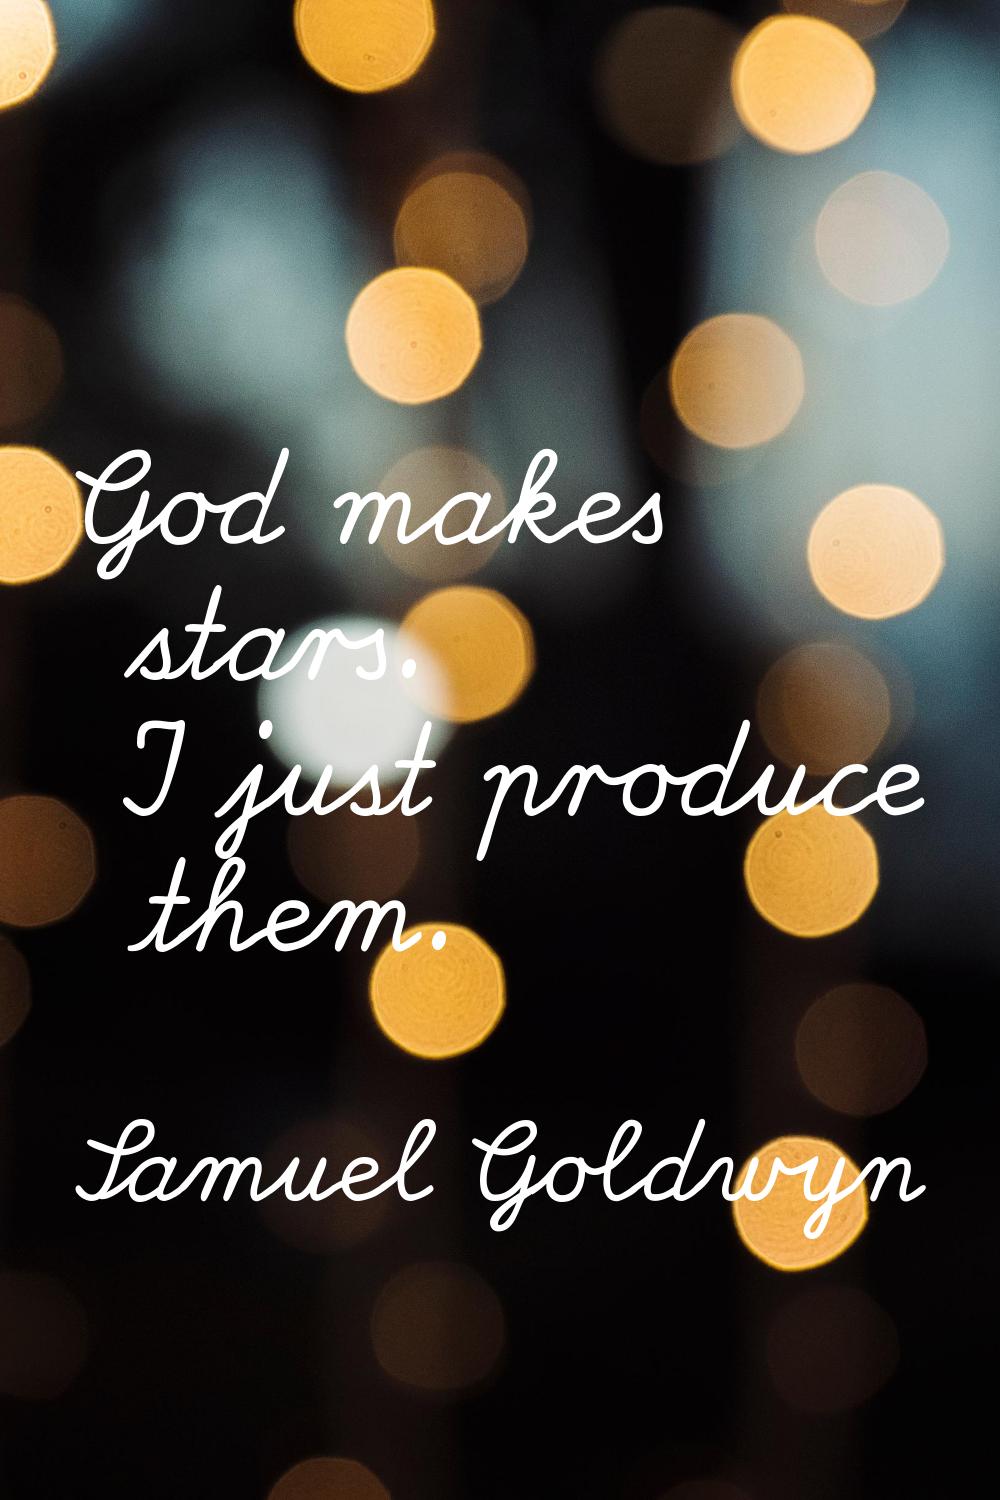 God makes stars. I just produce them.